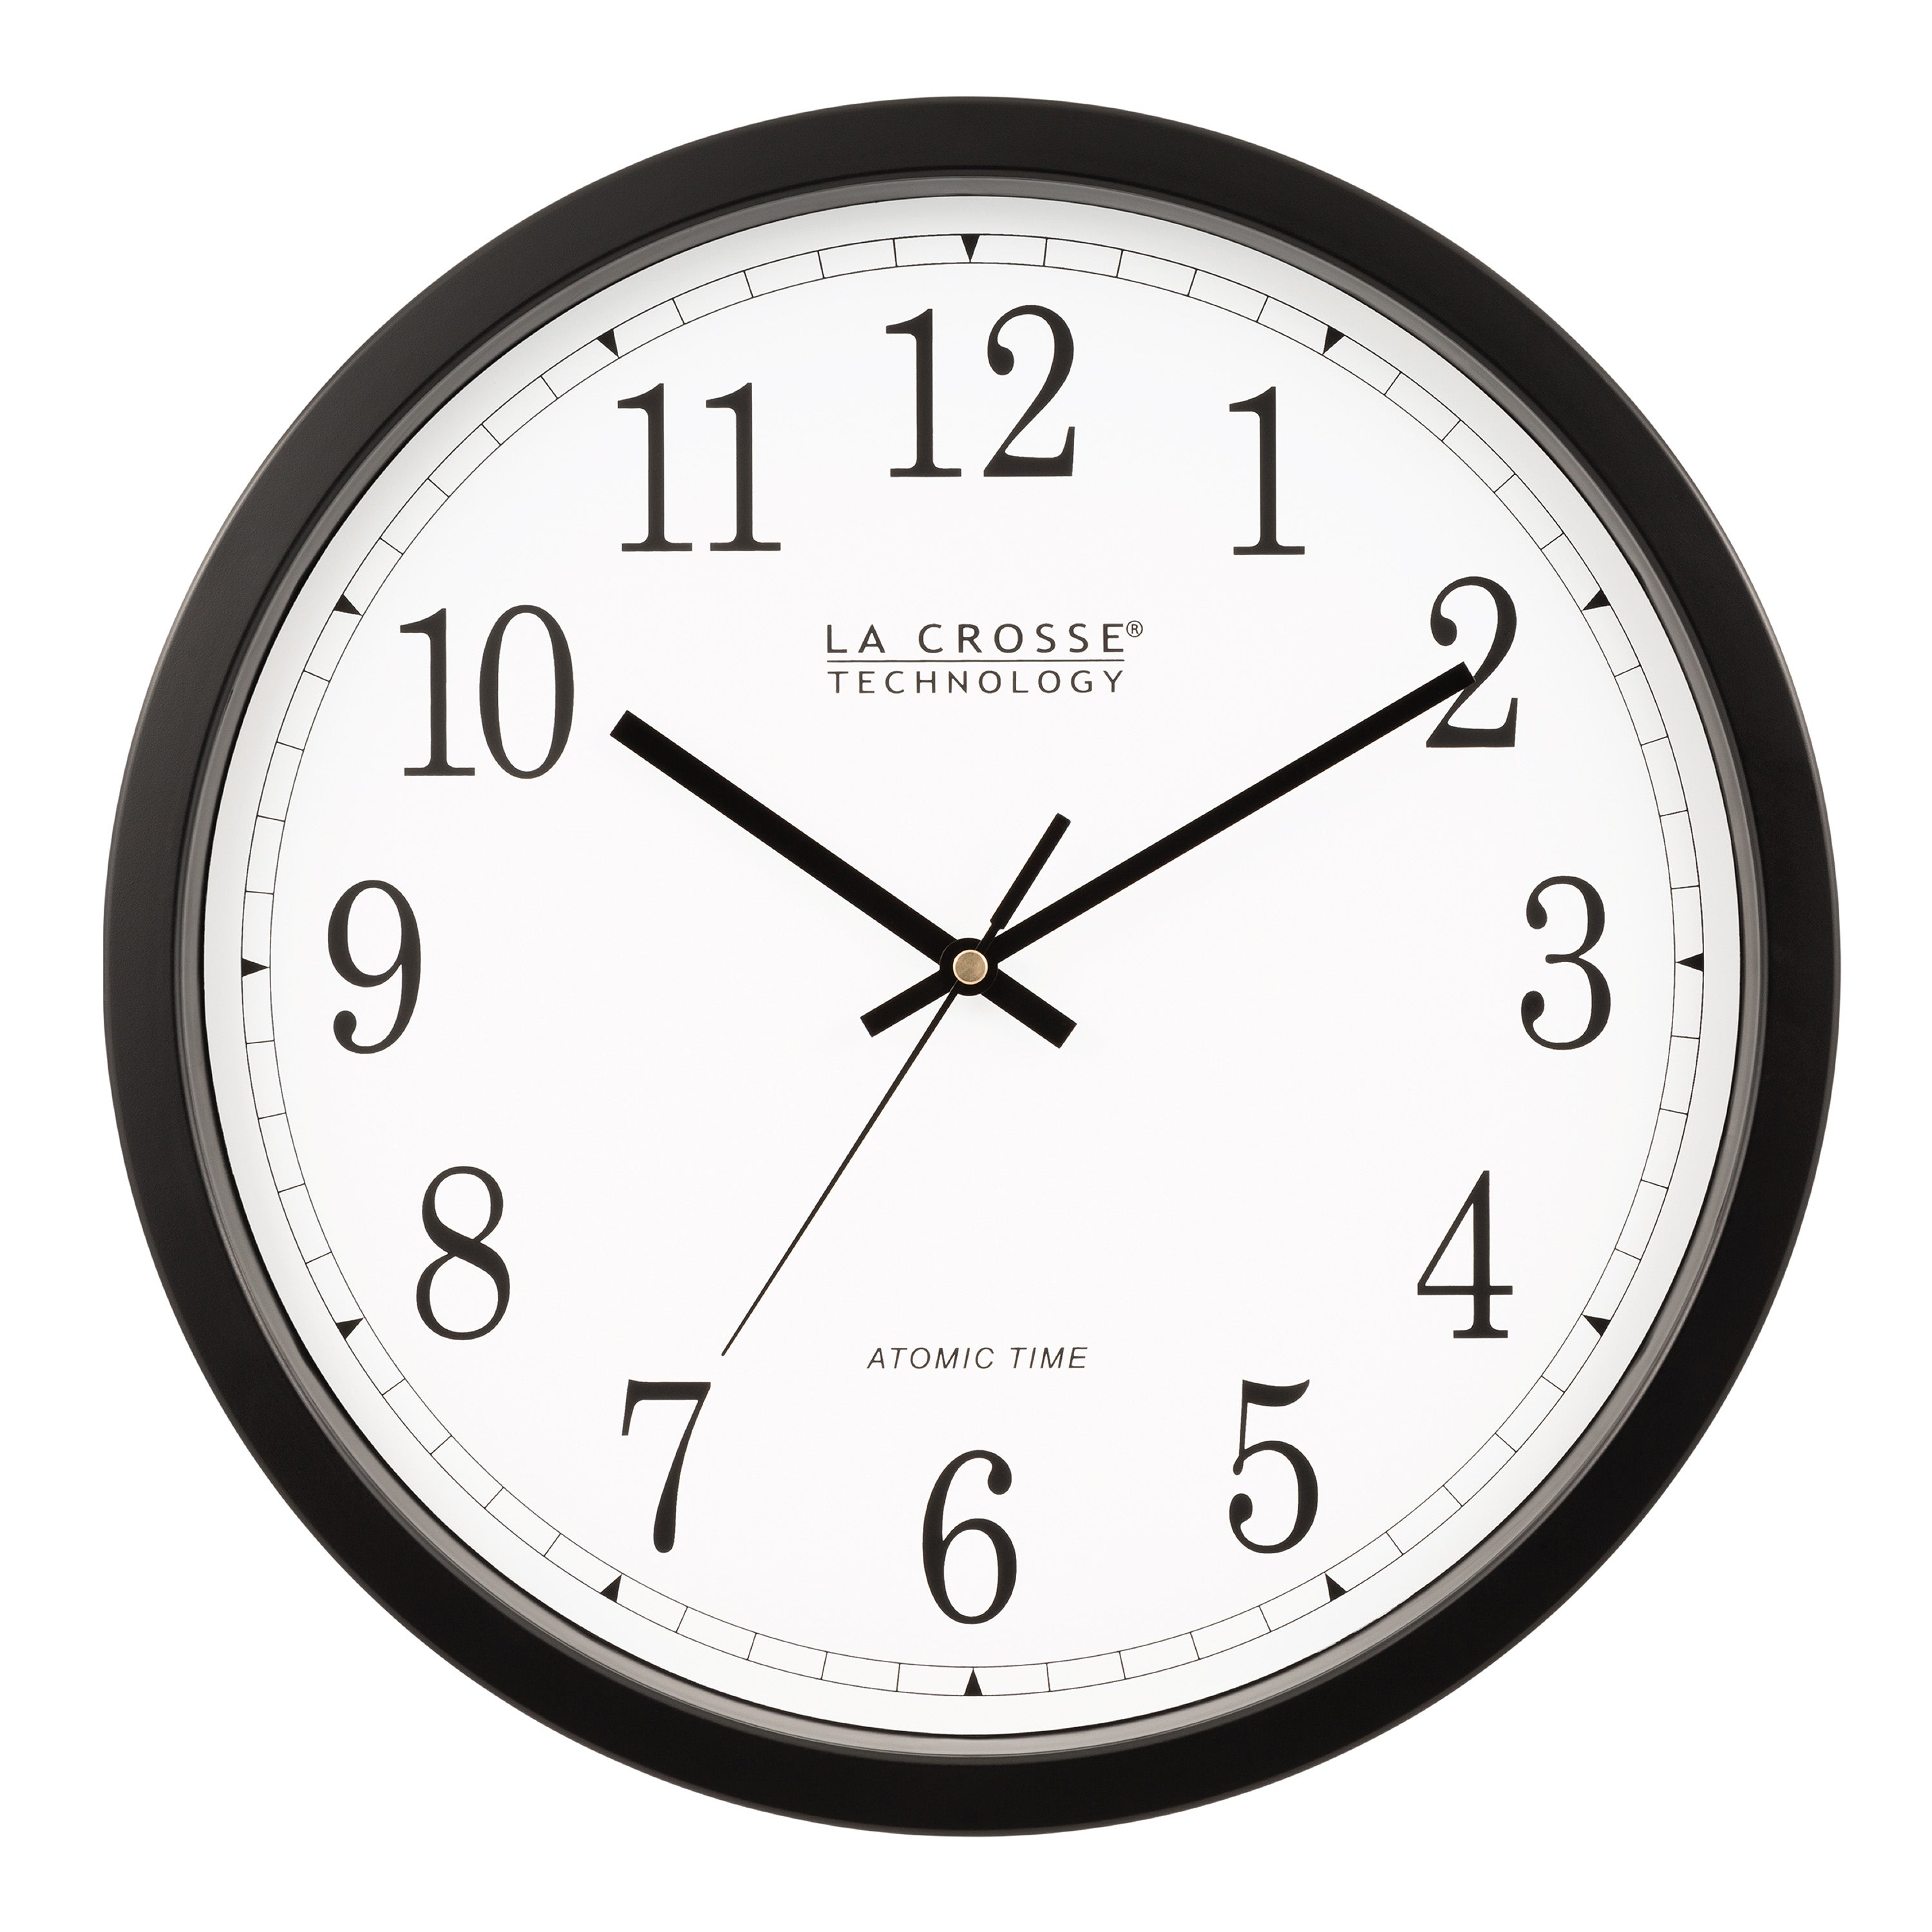 La Crosse Technology Wt-3143a 14 Atomic Analog Wall Clock, Black